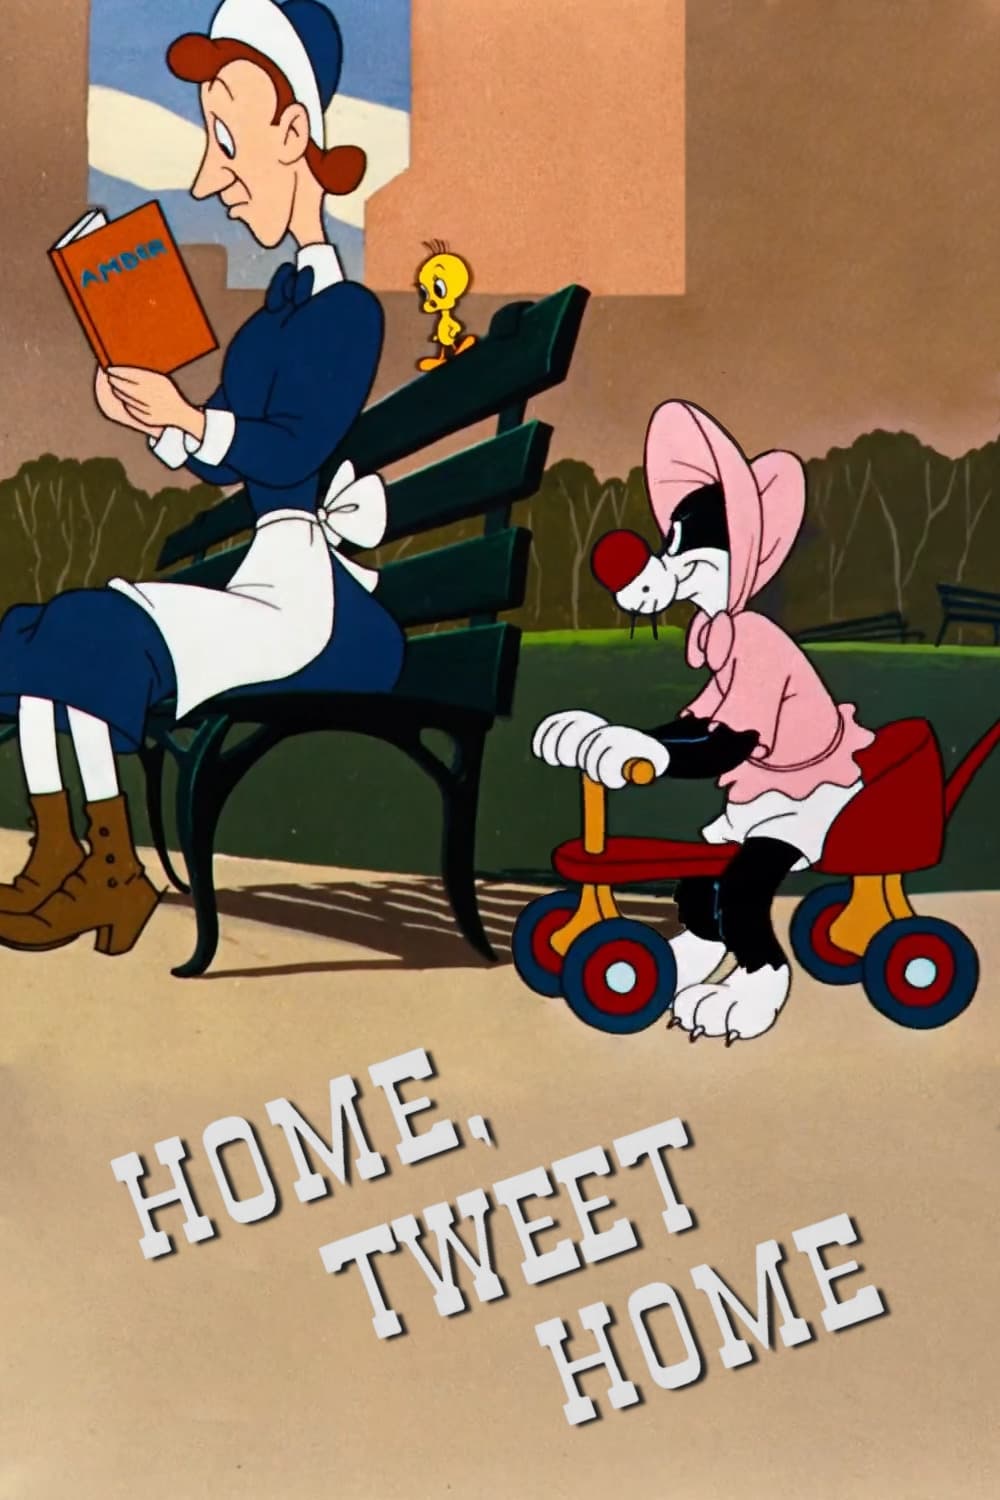 Home, Tweet Home (1950)